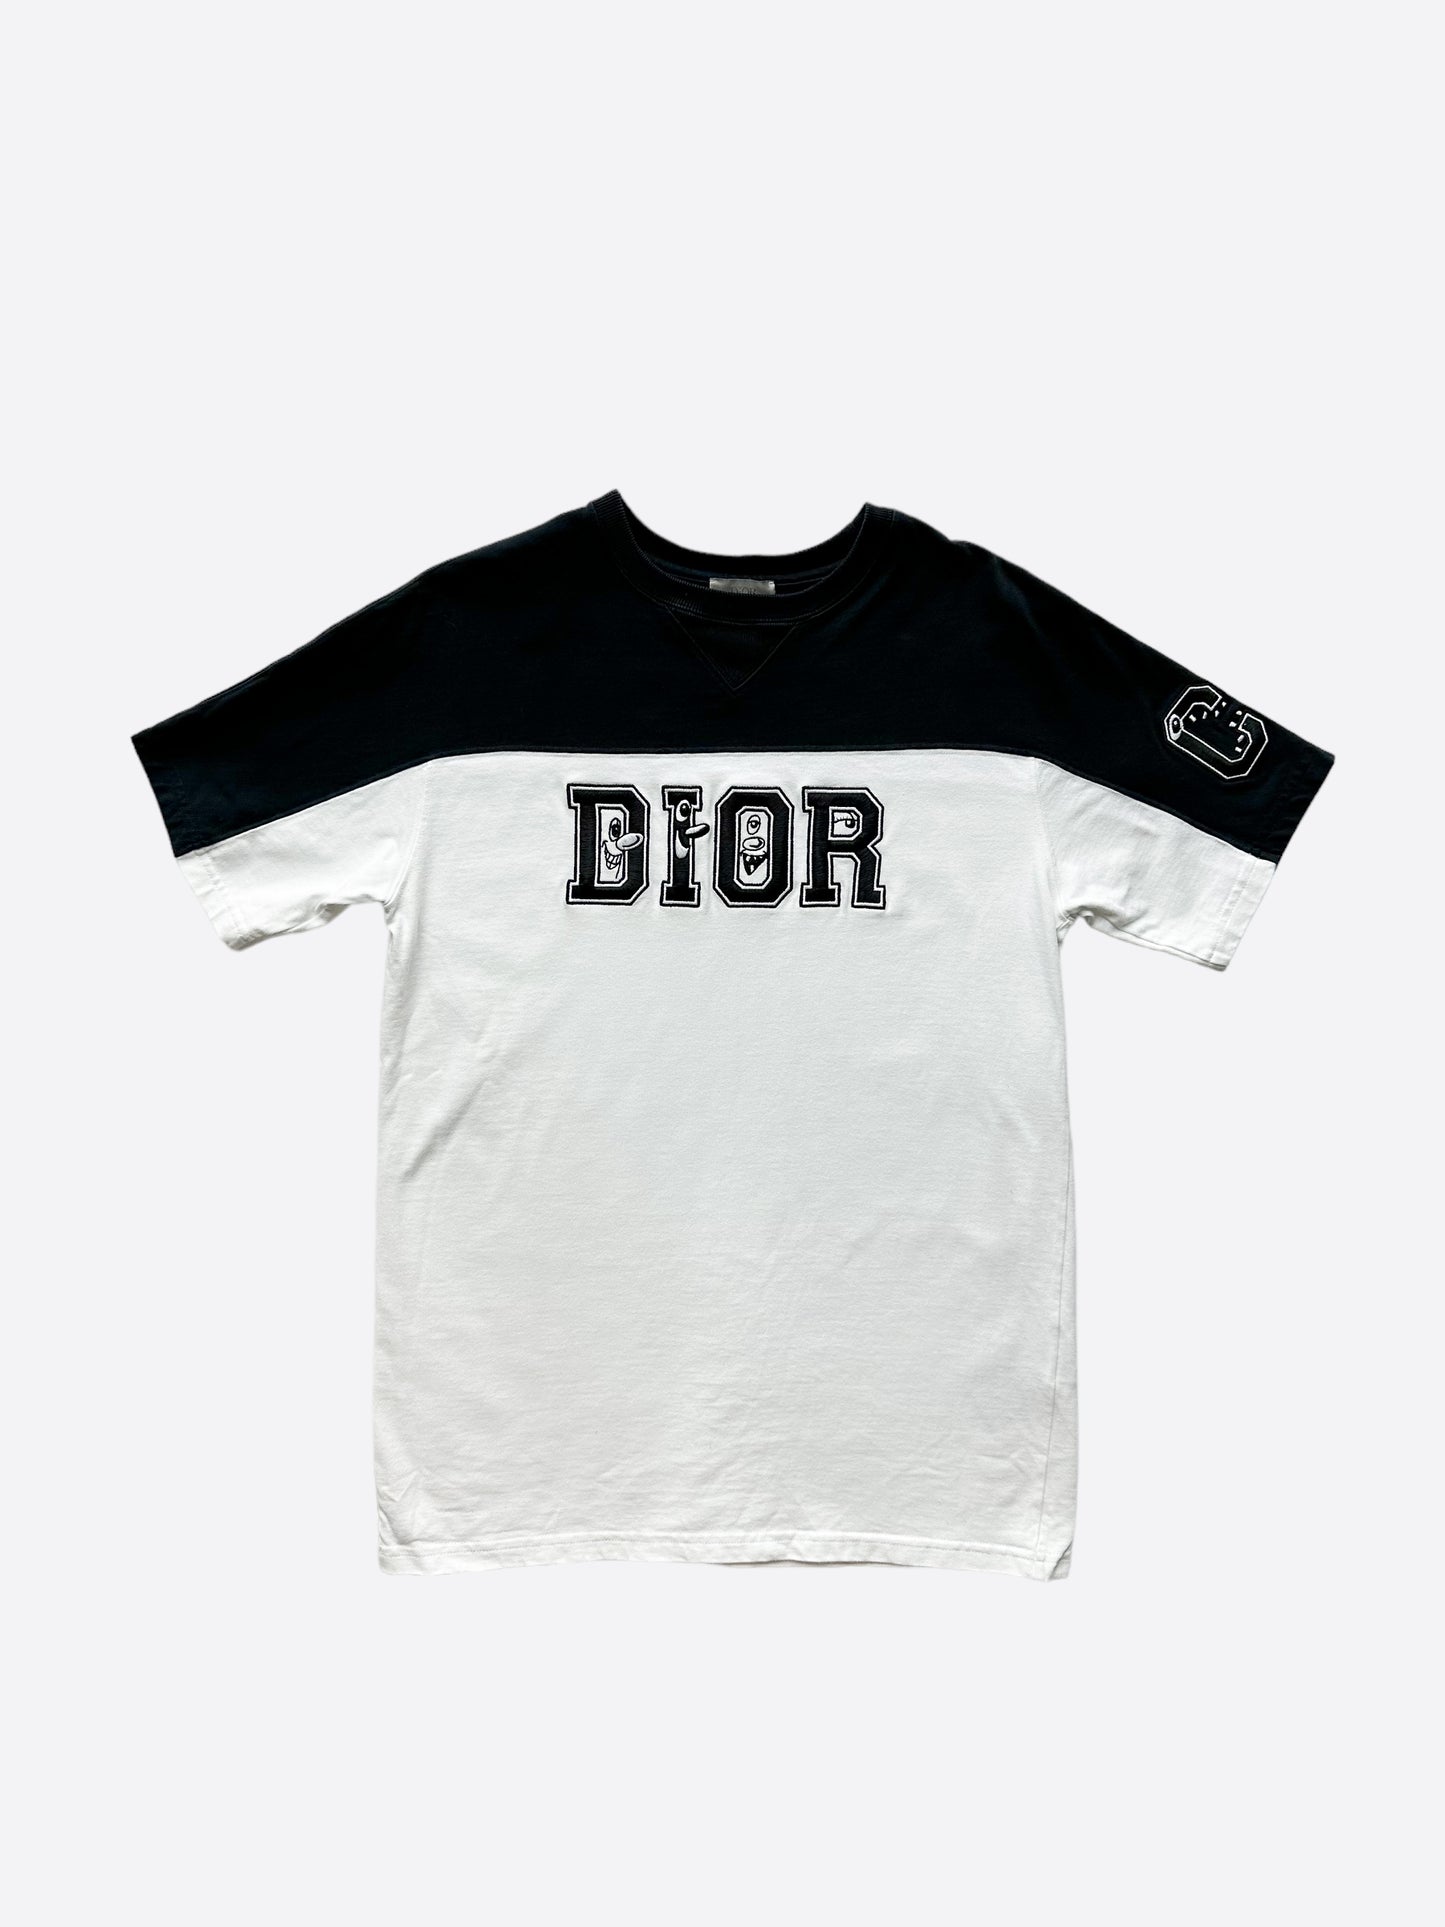 Christian Dior Men's Kenny Scharf Oblique T Shirt